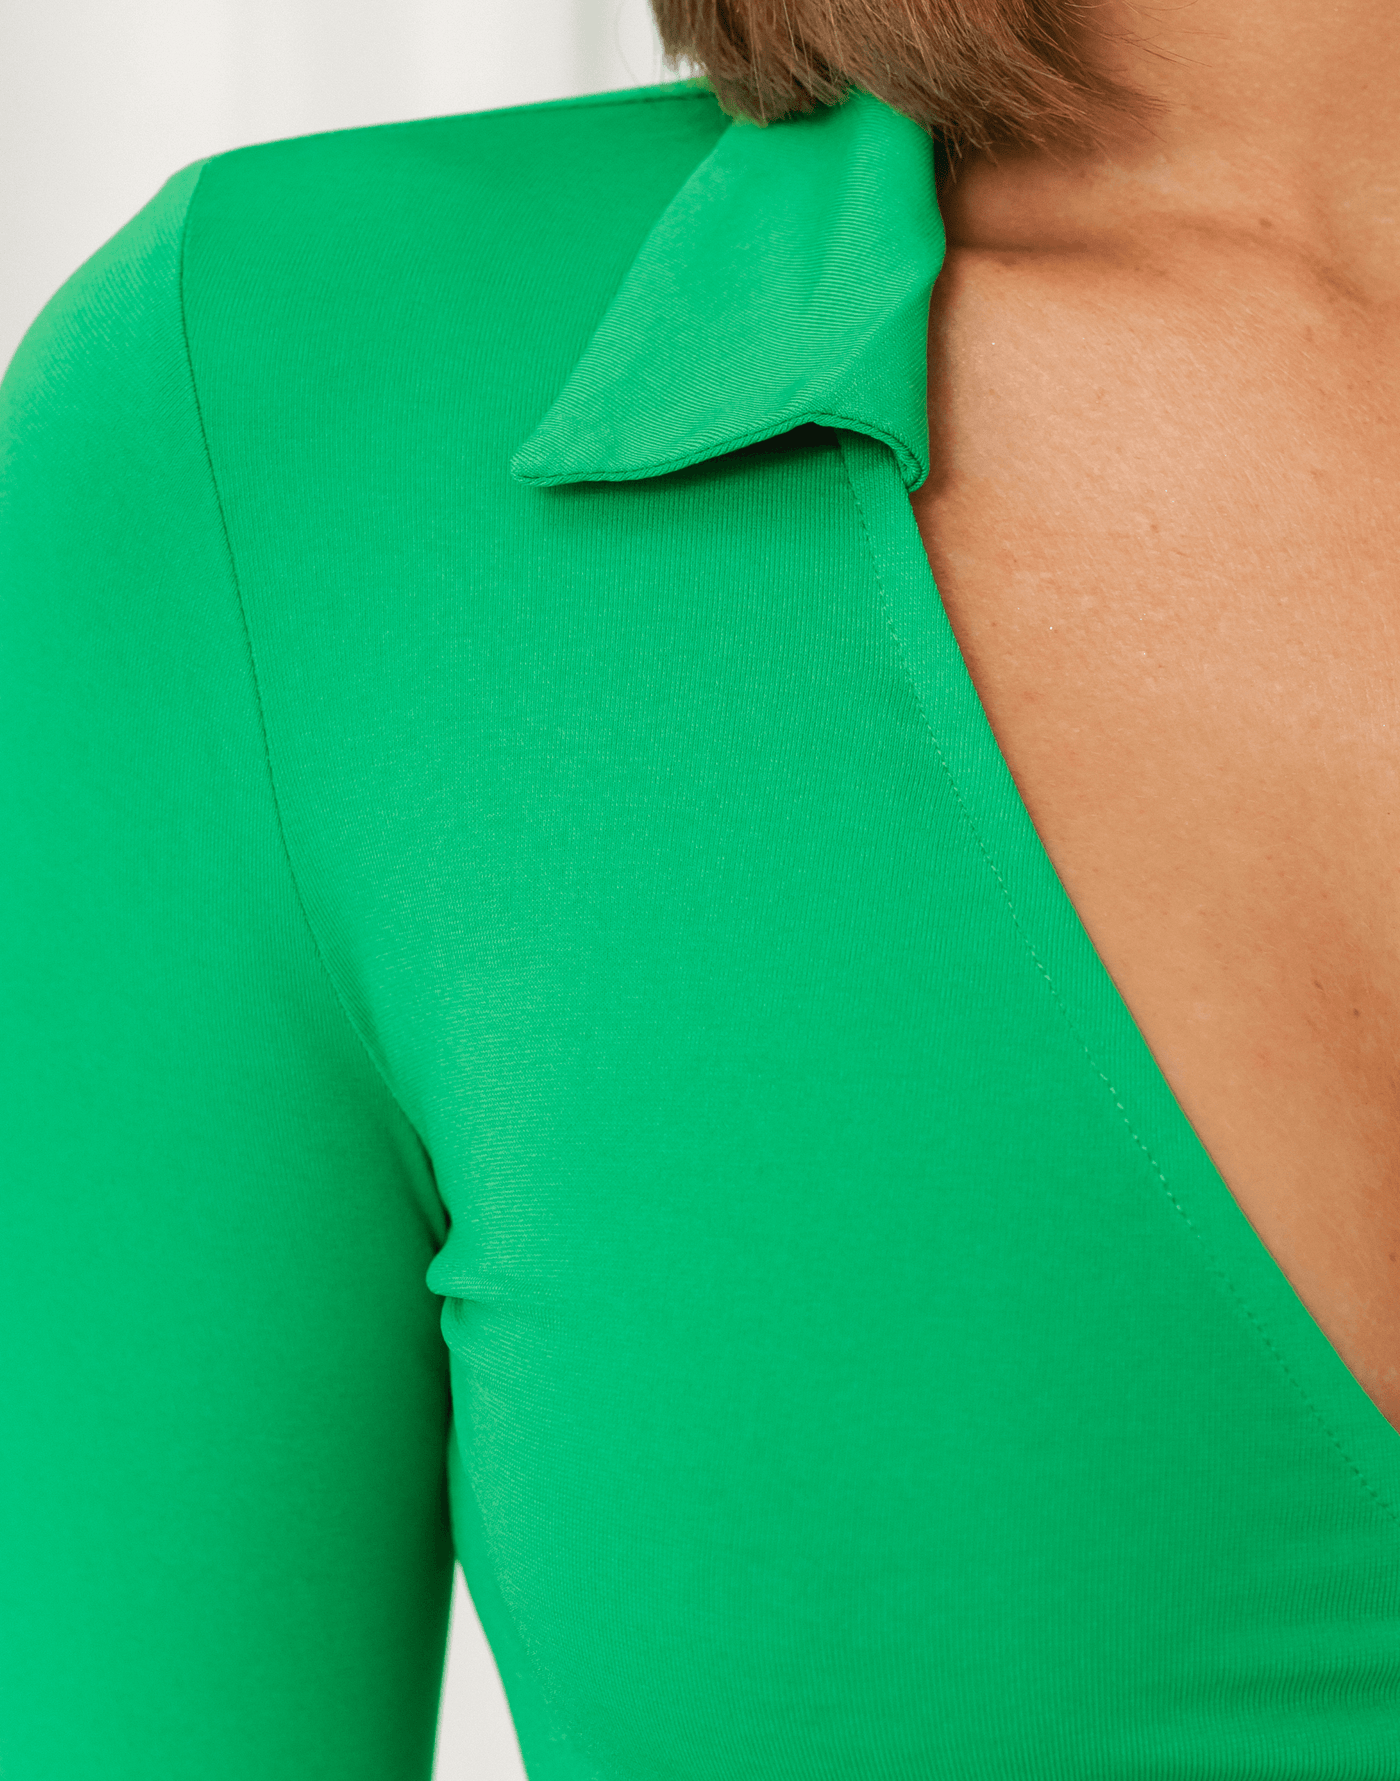 Dhalia Mini Dress (Green) - Green Rouched Wrap Style Mini Dress - Women's Dress - Charcoal Clothing